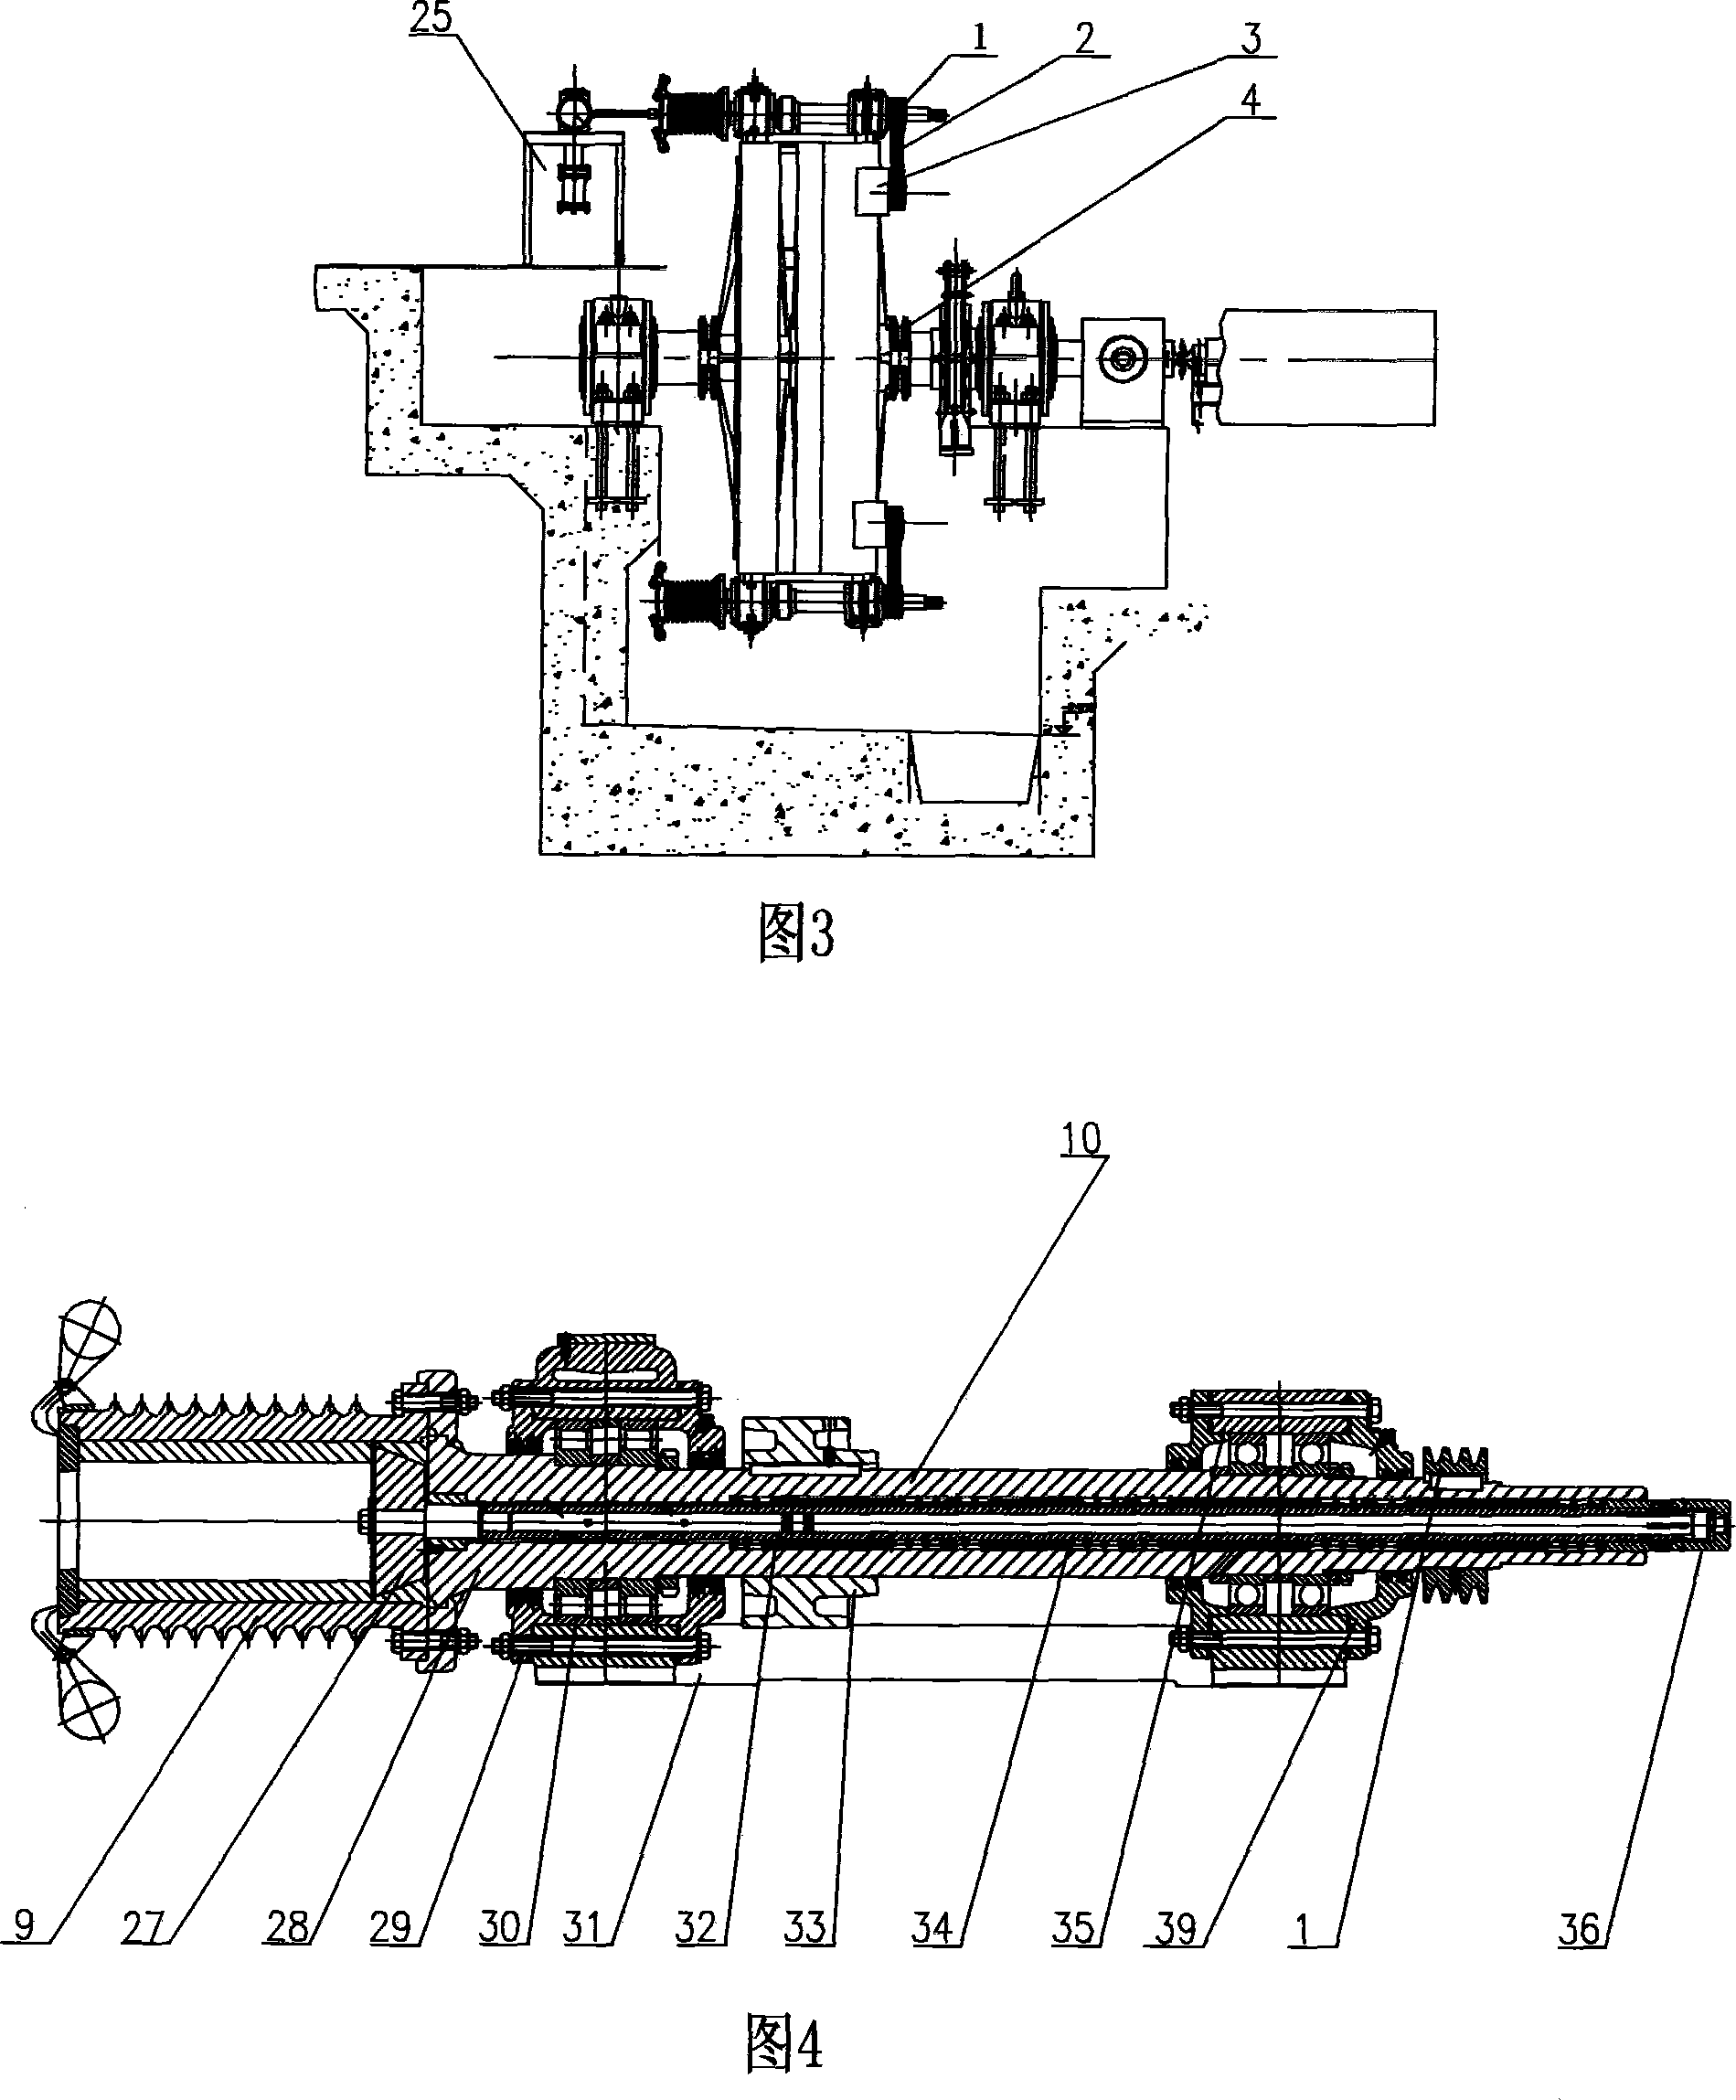 Full-automatic twelve-station centrifugal casting machine